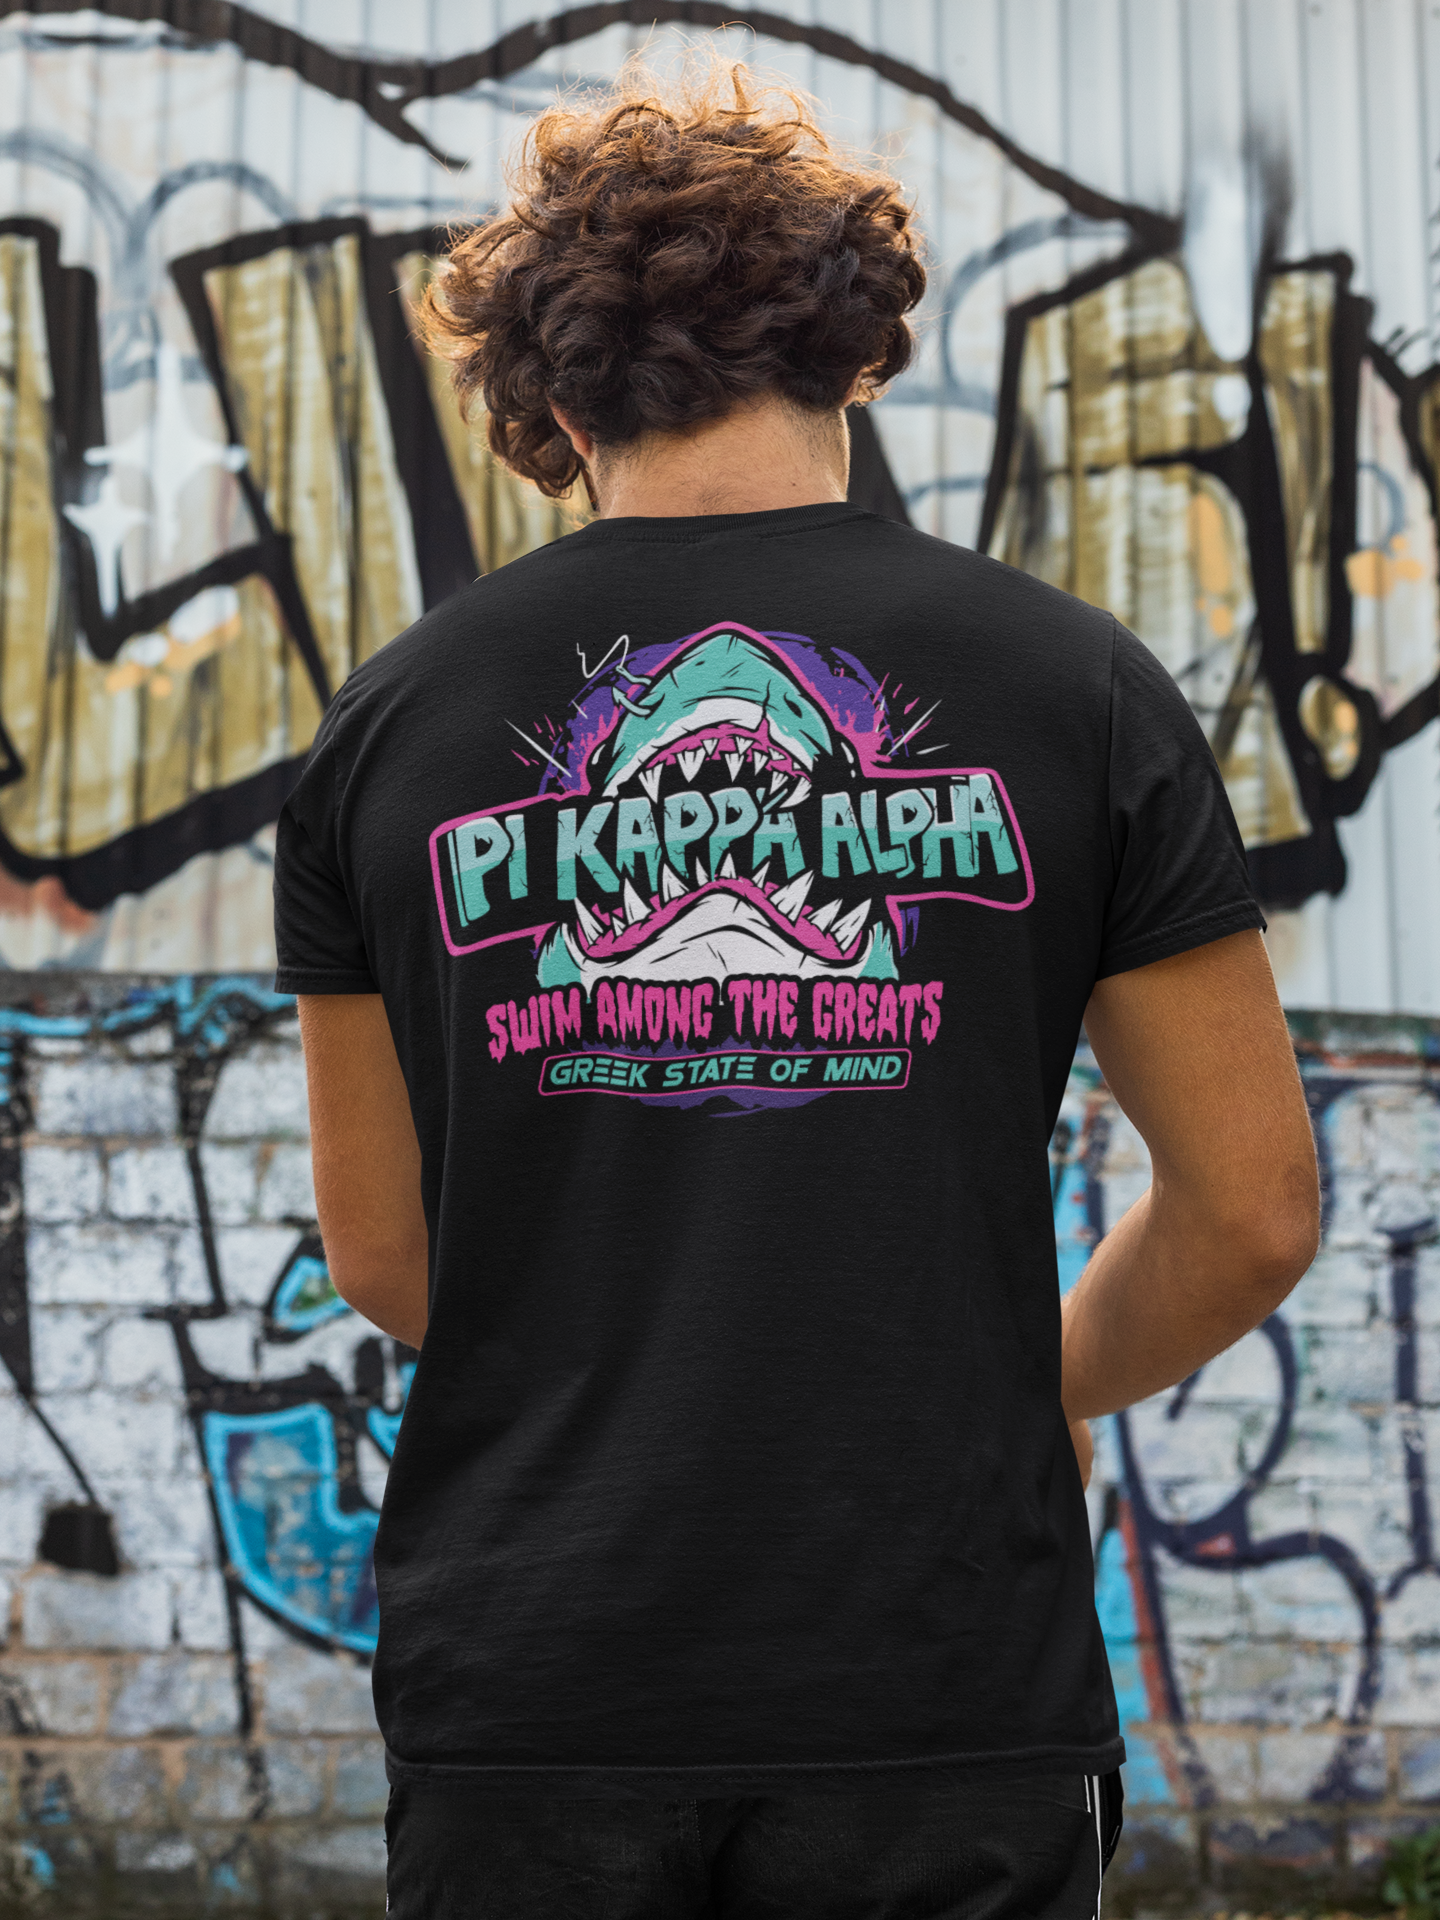 Pi Kappa Alpha Graphic T-Shirt | The Deep End | Pi kappa alpha fraternity shirt model 